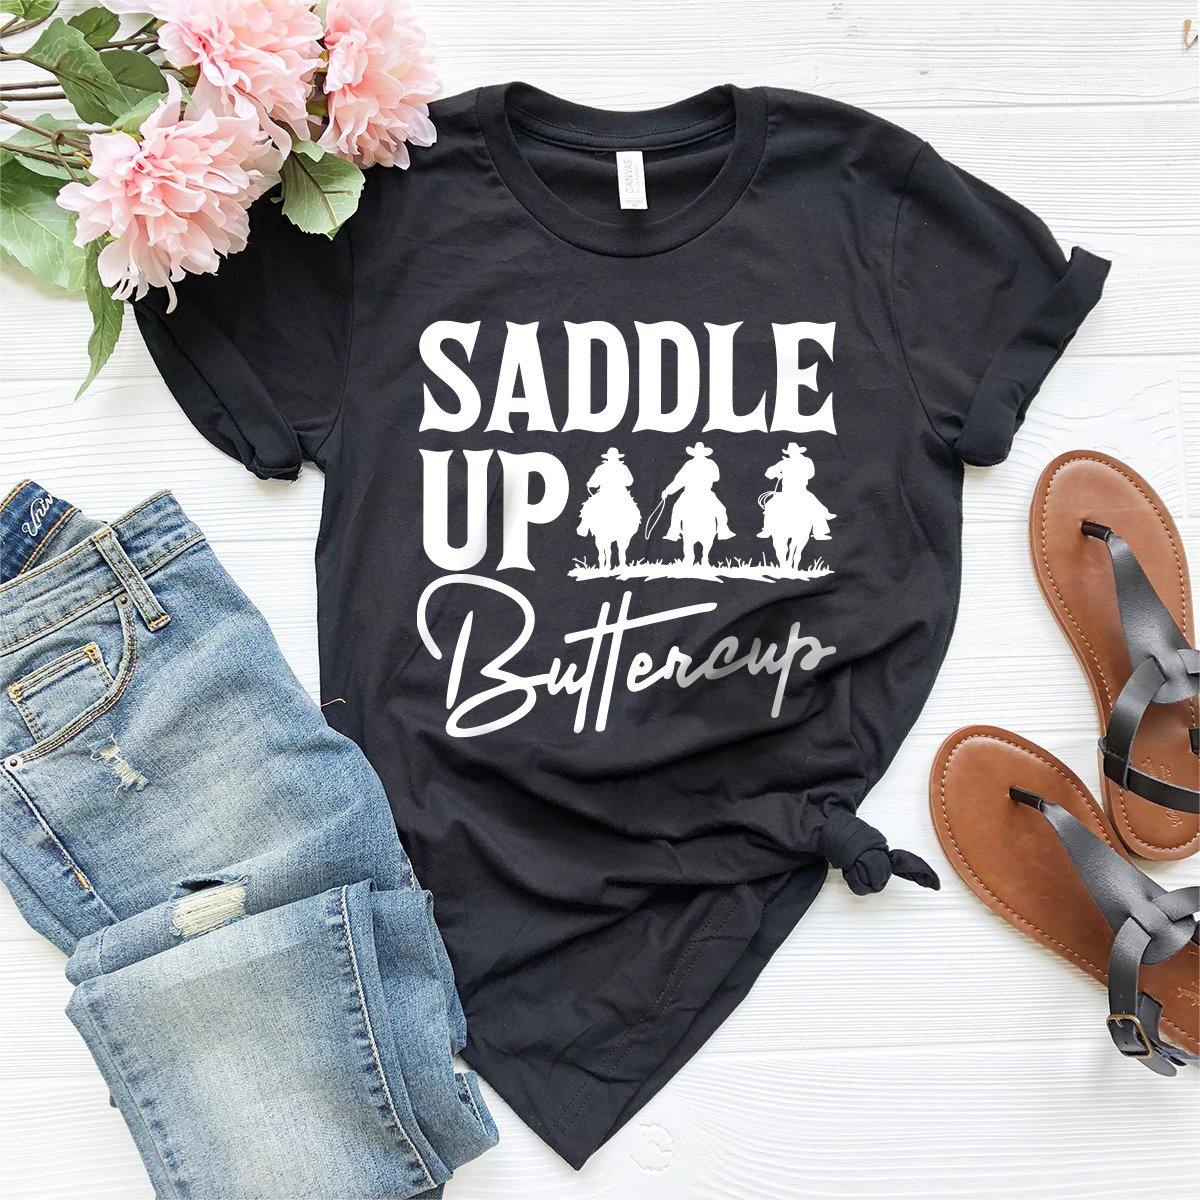 Cowboy T-Shirt, Cowgirl Shirt, Western Shirt, Saddle Up Buttercup Shirt, Rodeo Shirt, Hippie Boho Shirt, Country Shirt, Country Girl Shirt - Fastdeliverytees.com